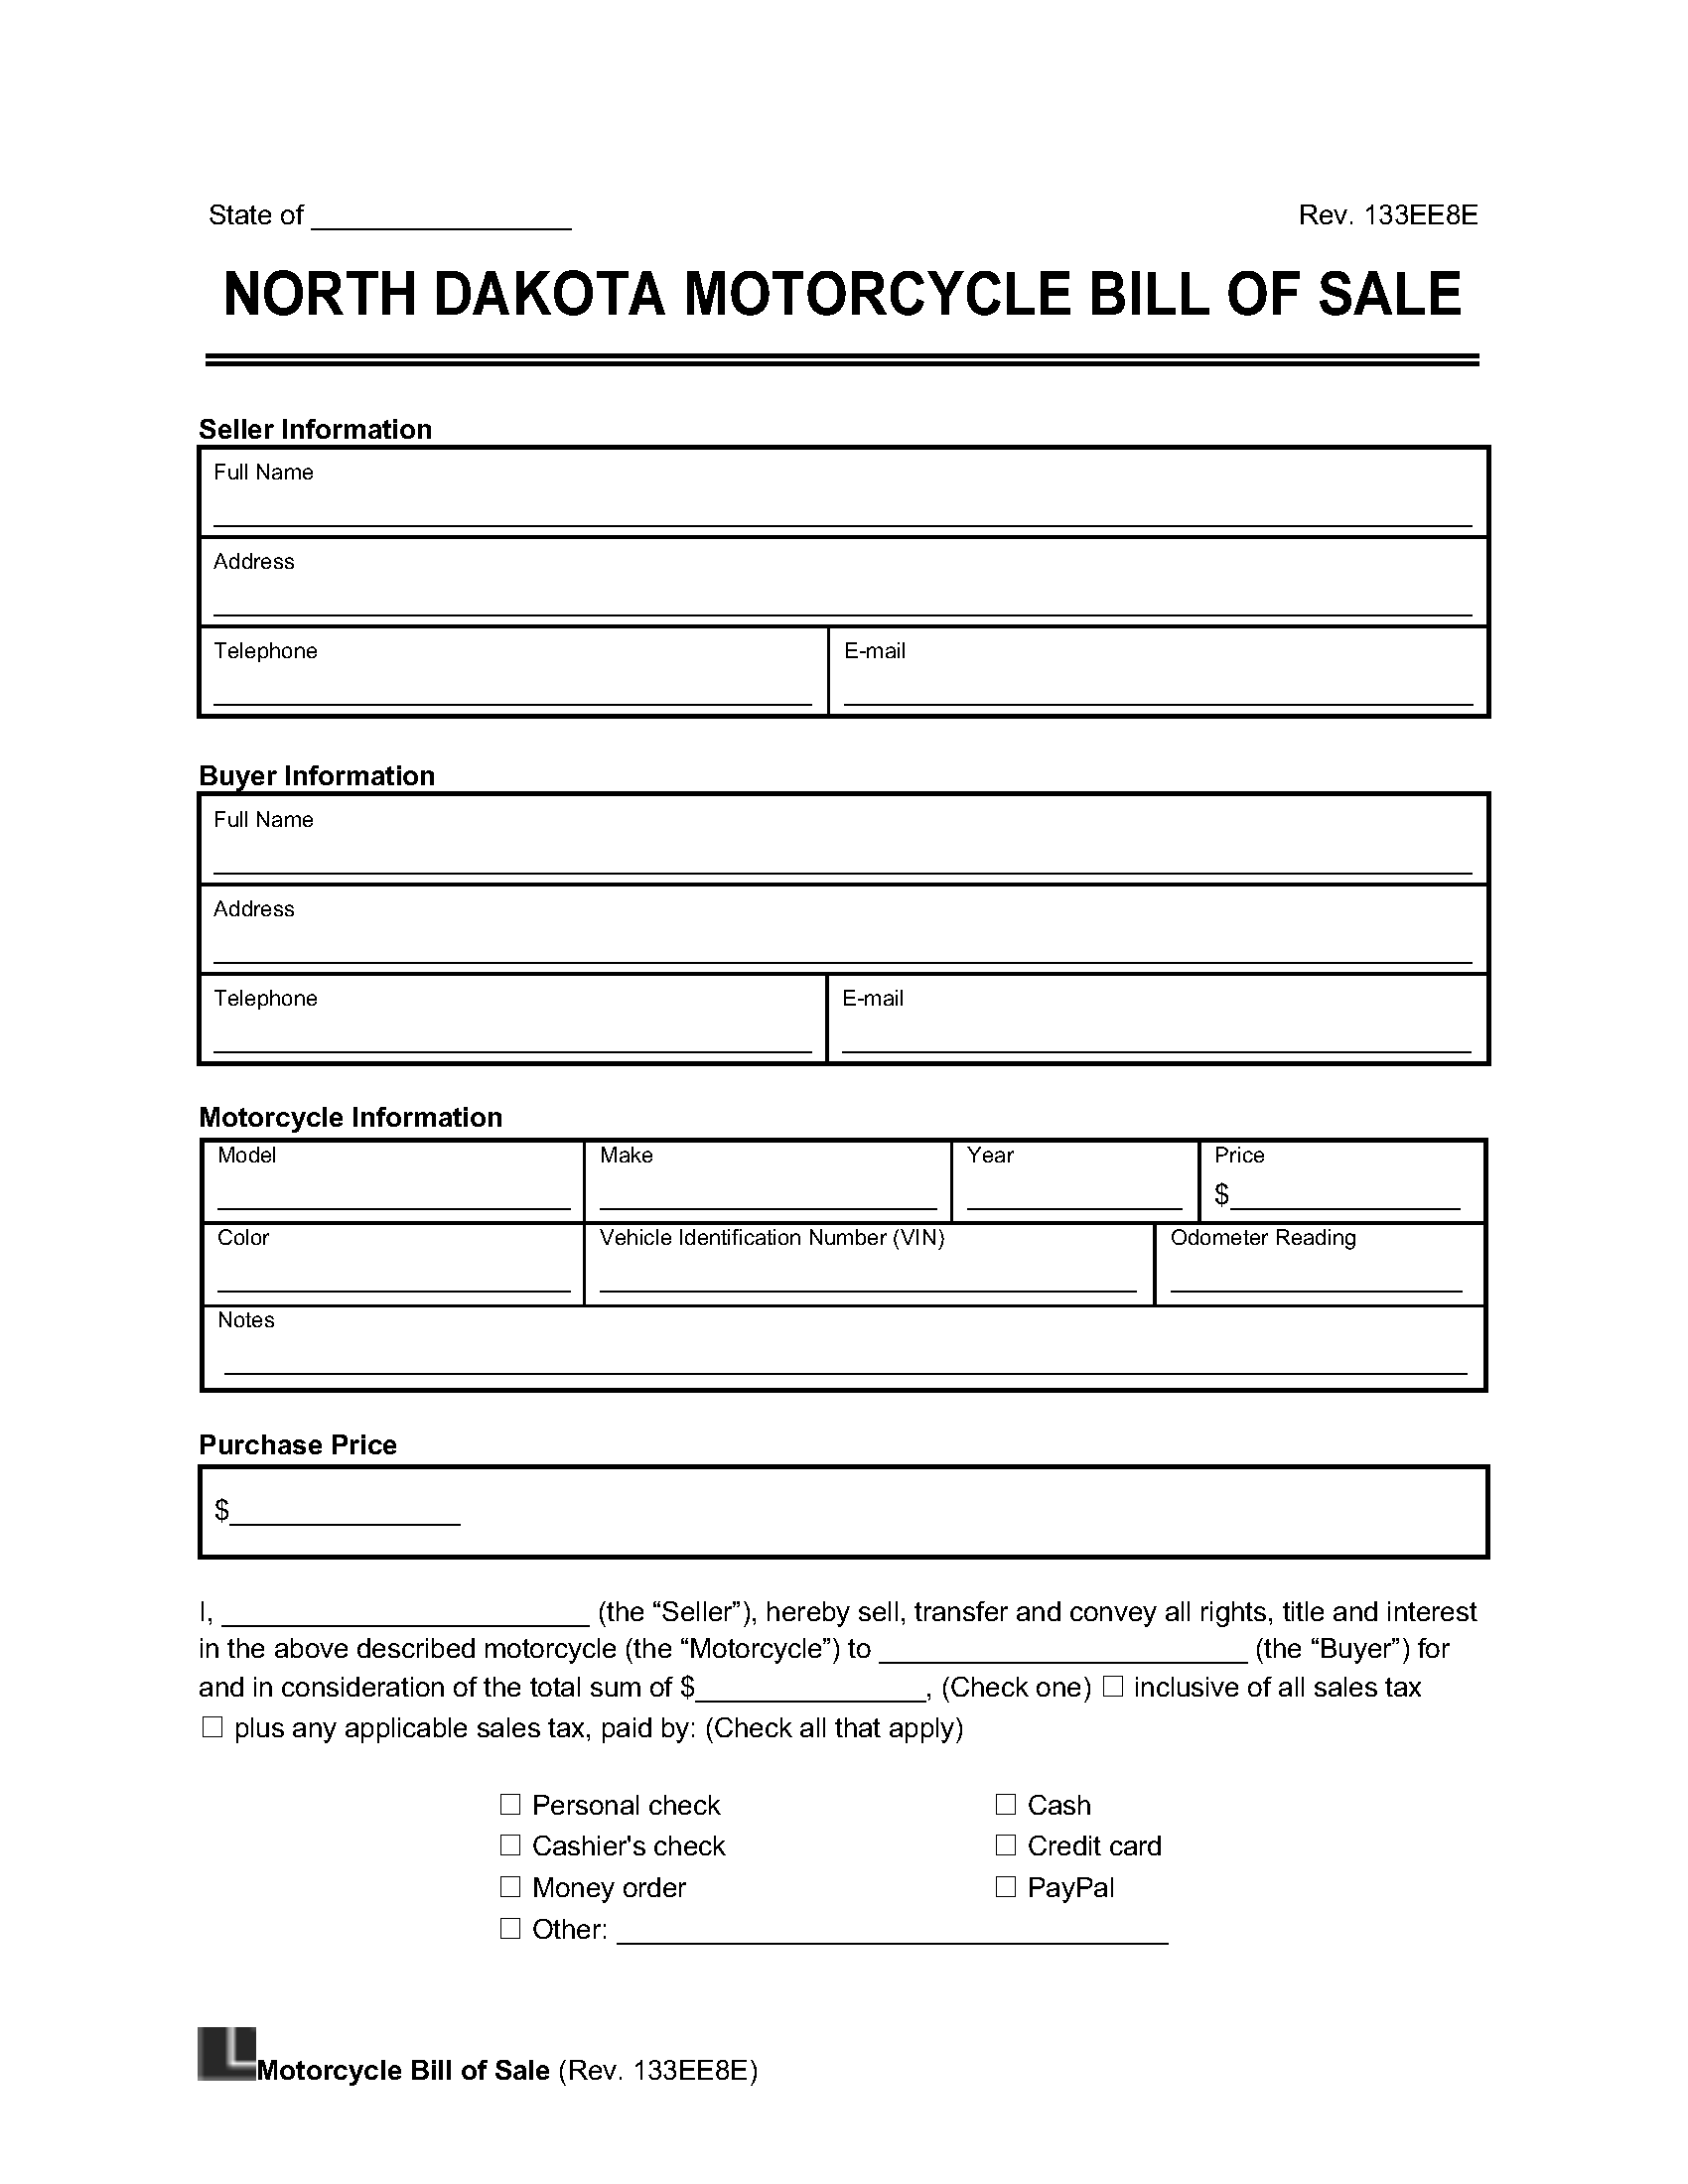 north dakota motorcycle bill of sale